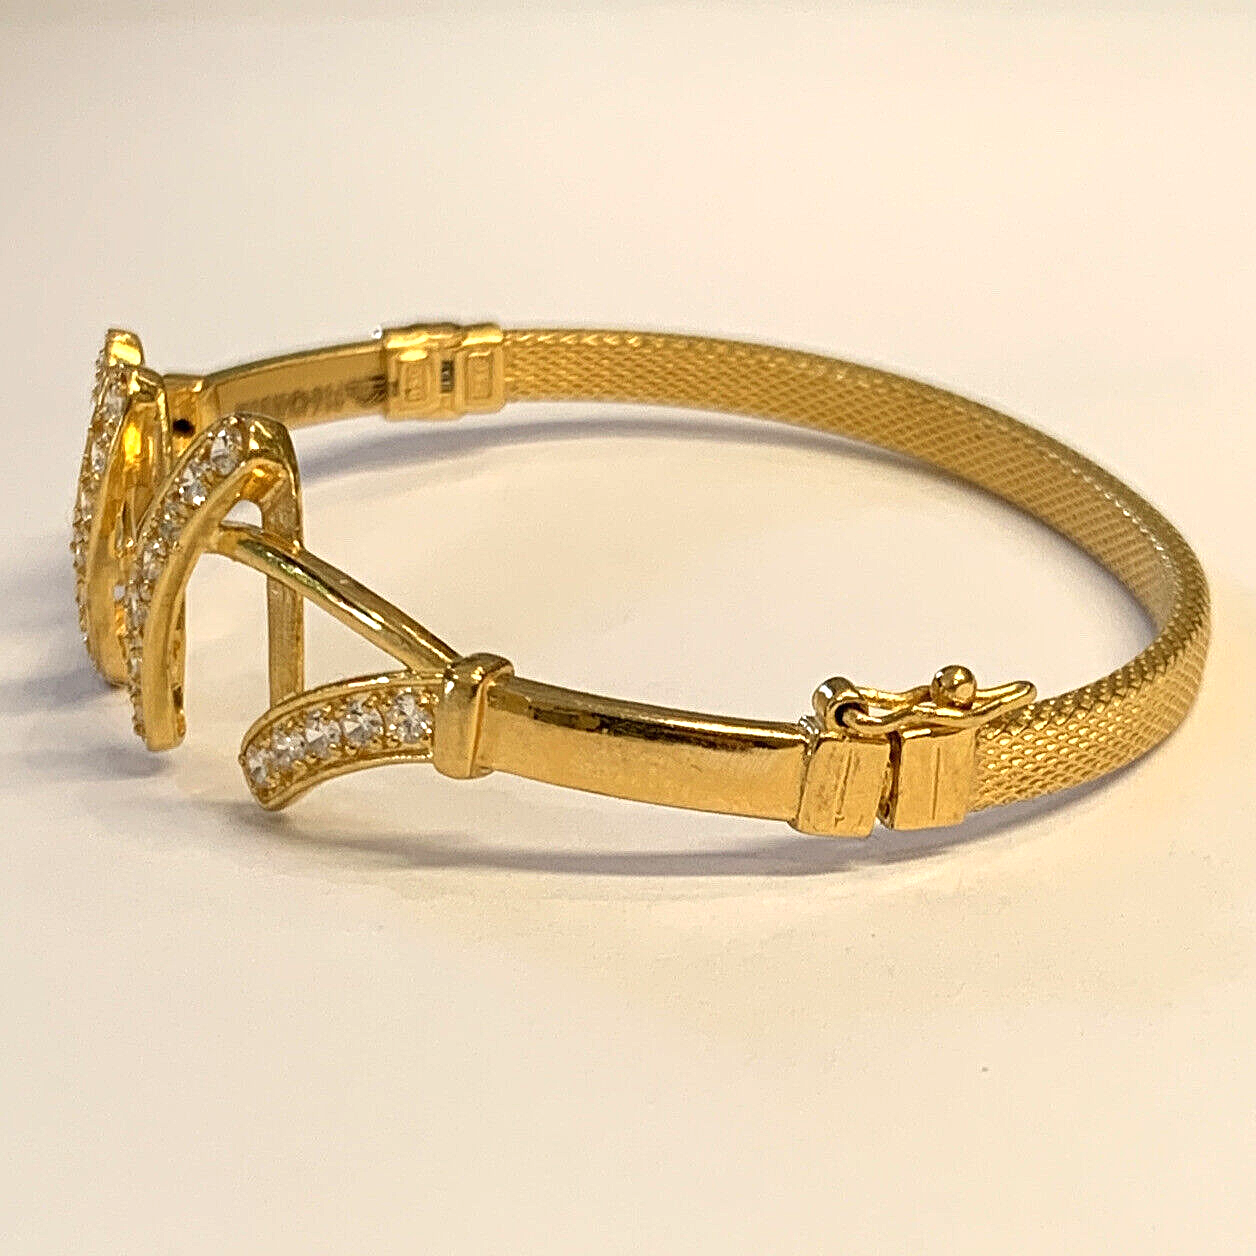 22k 916 Gold Ladies CZ Bangle Bracelet - 15.2 Grams